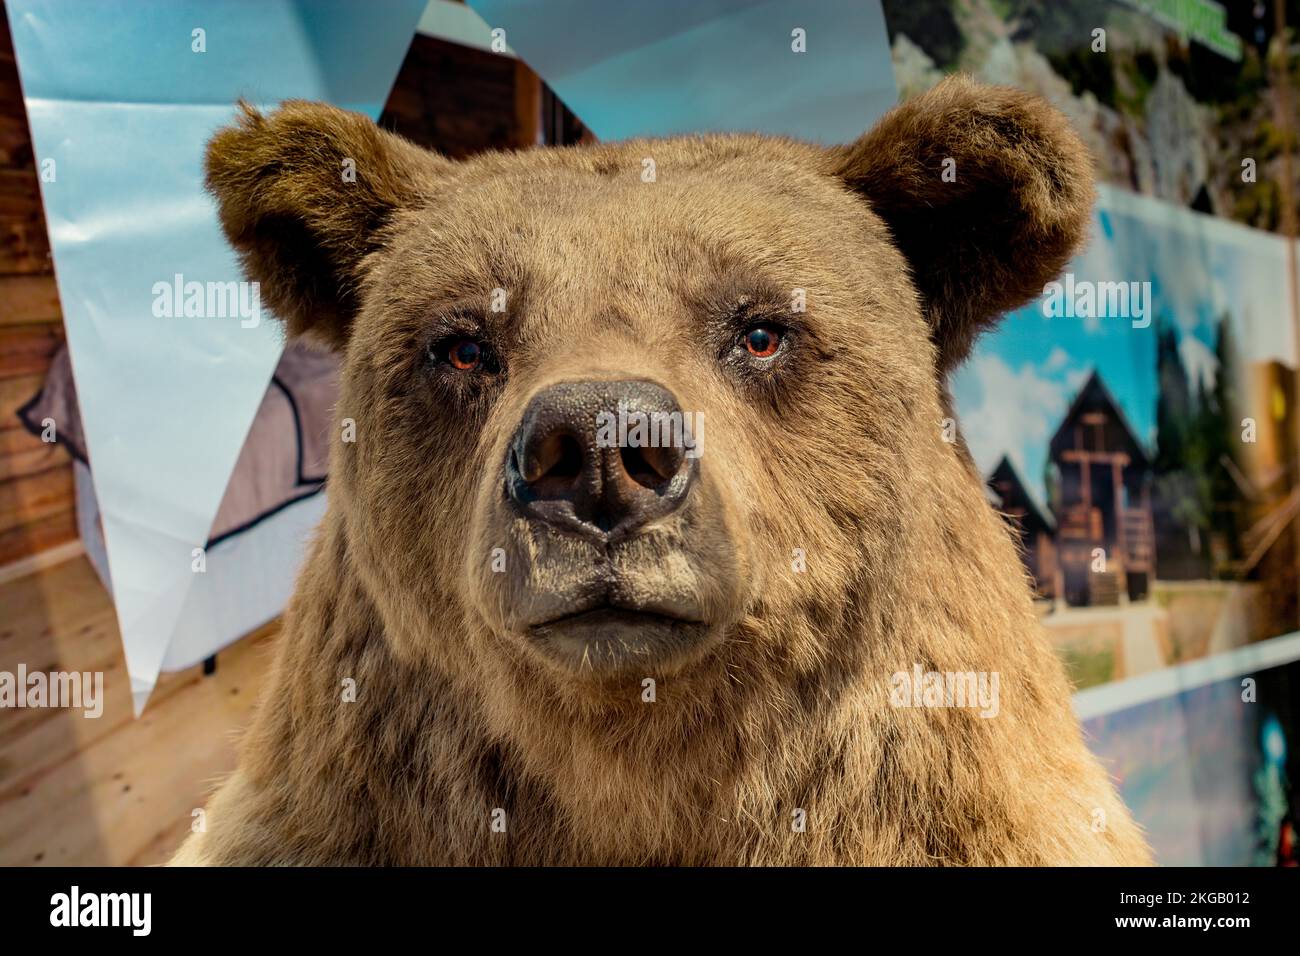 Head of a stuffed big brown bear as wild animal Stock Photo